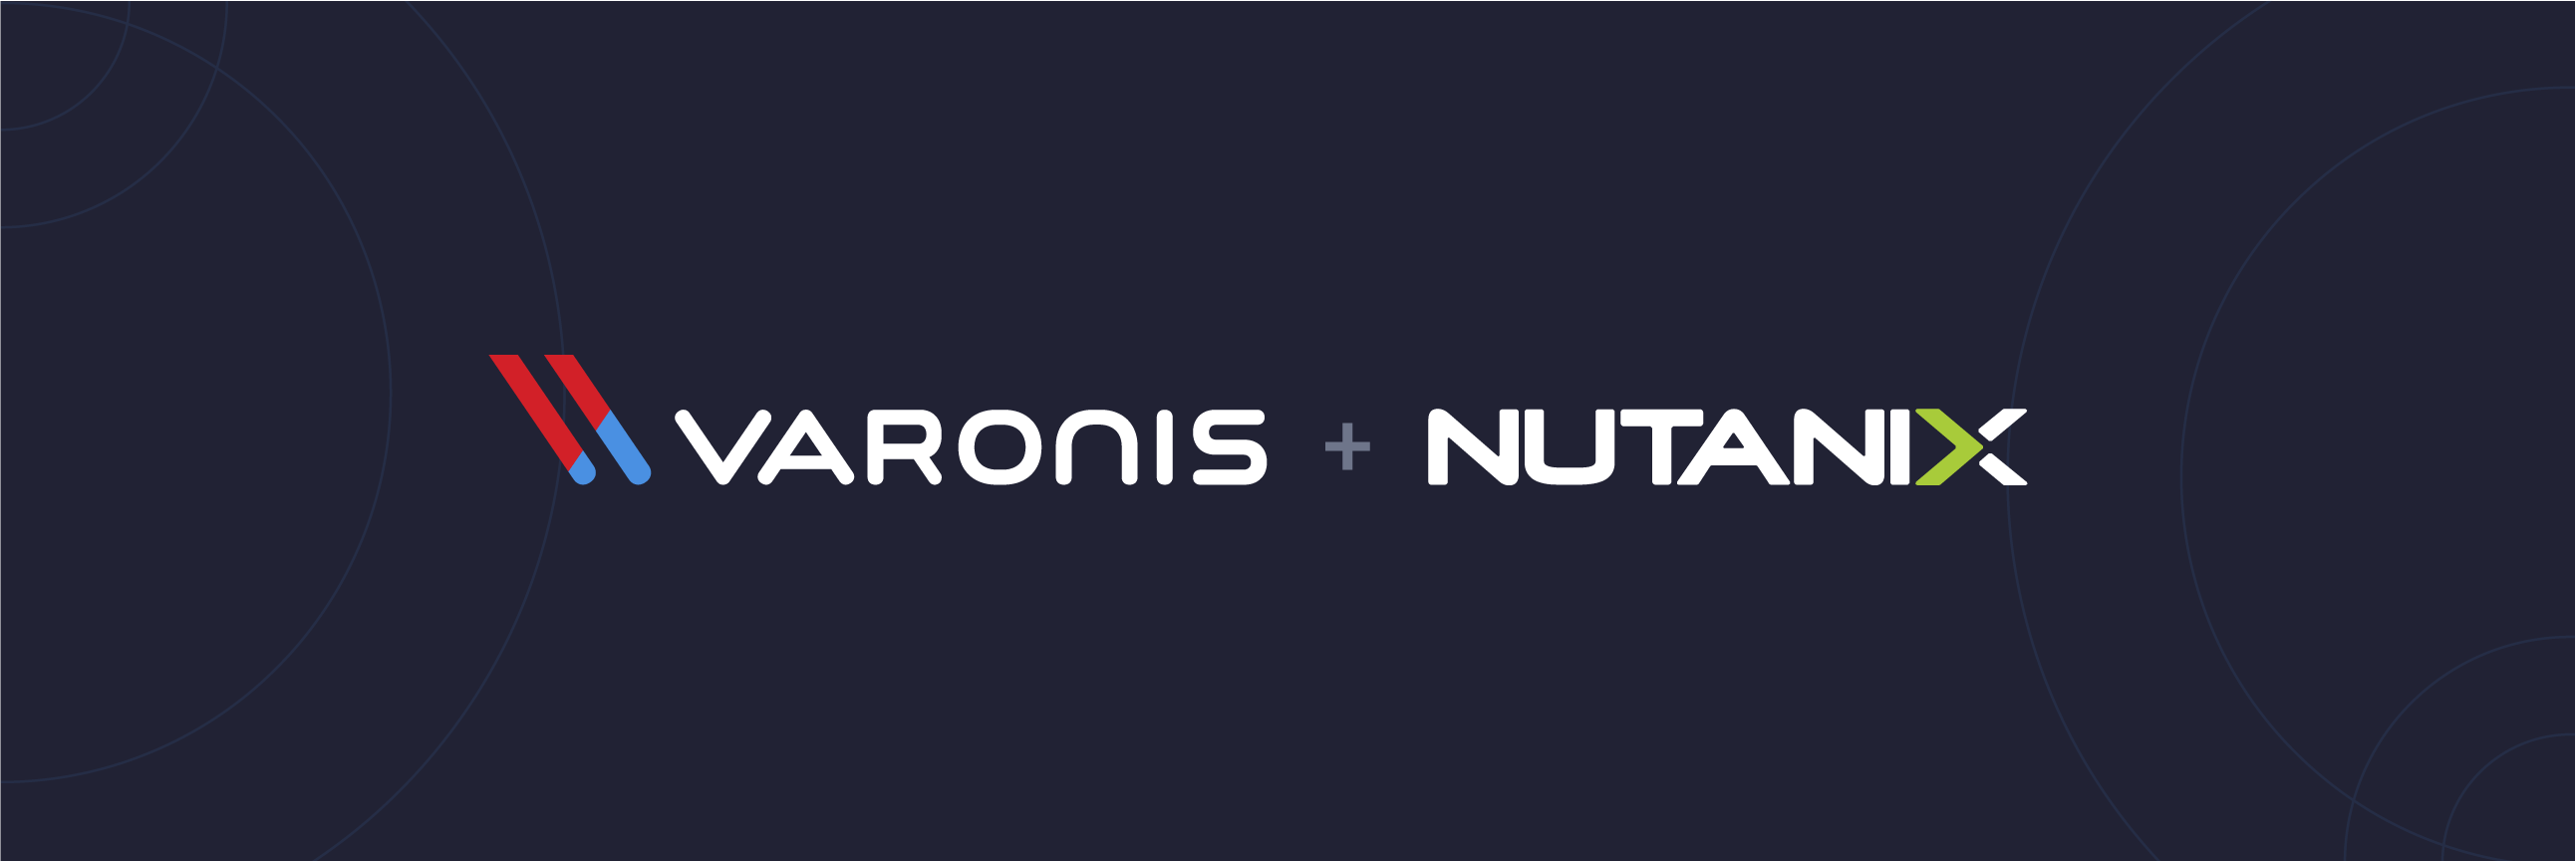 Varonis extends security capabilities to Nutanix Files